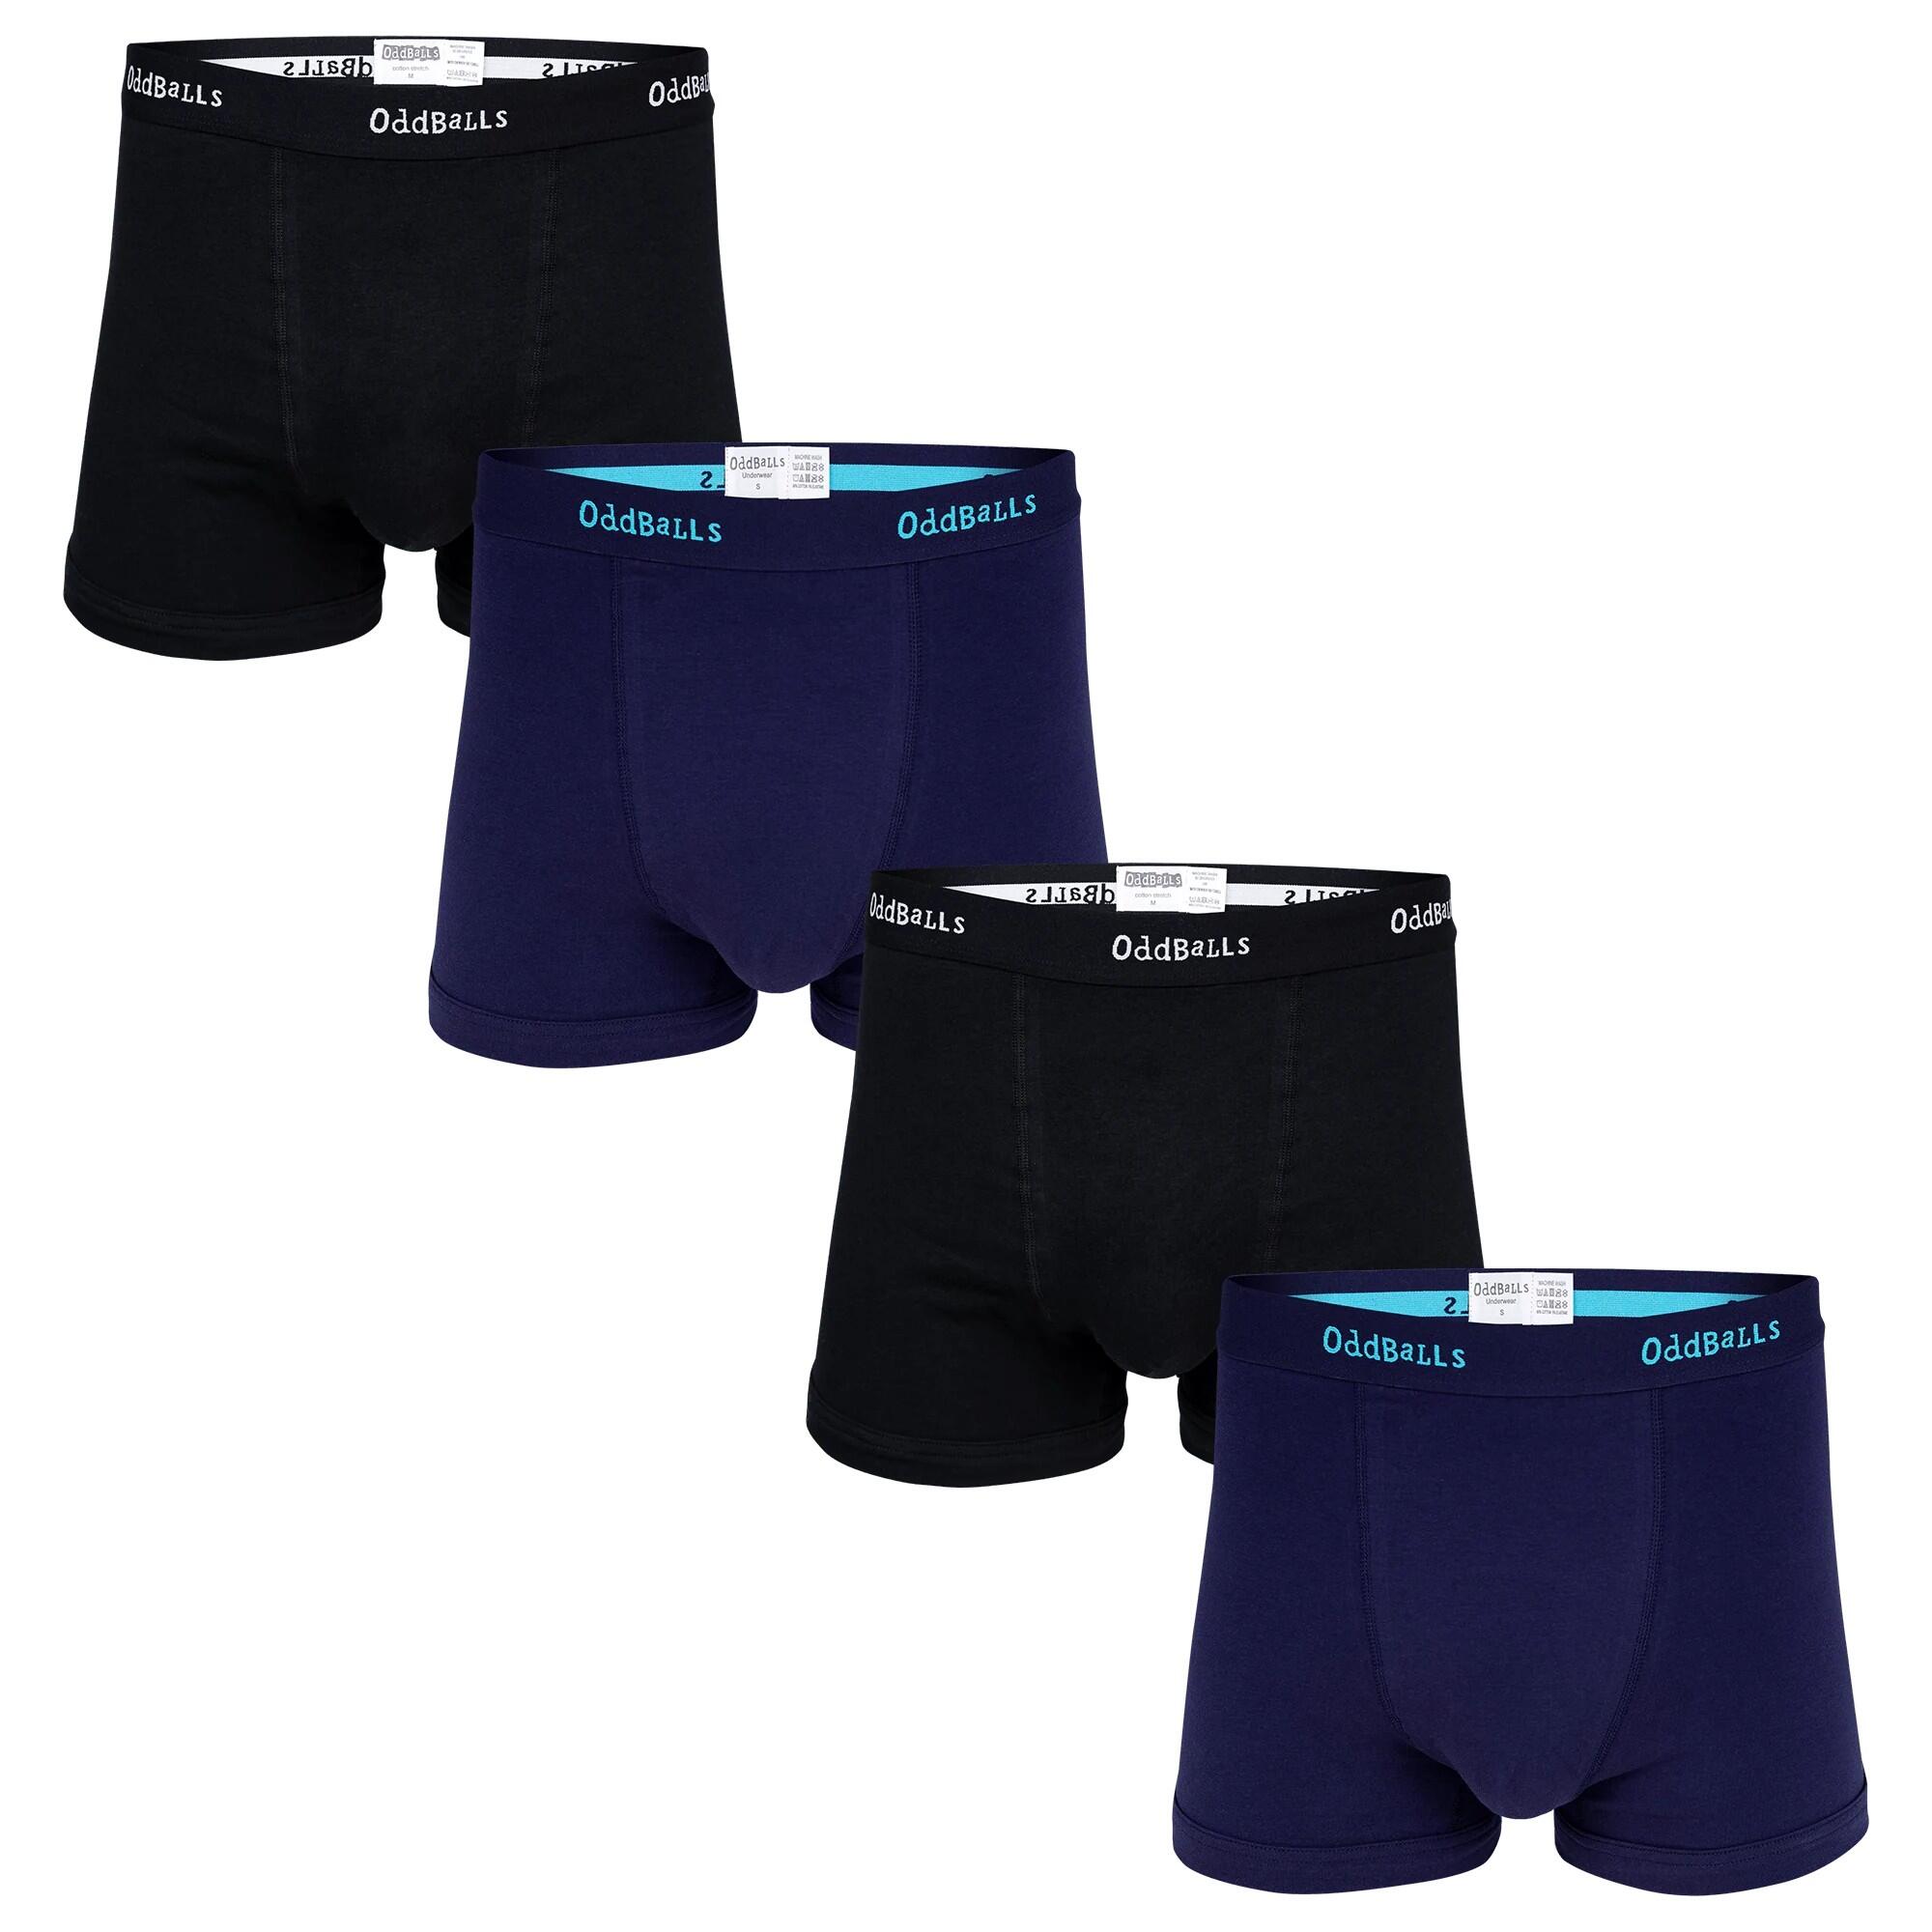 ODDBALLS Mens Plain Boxer Shorts (Pack of 4) (Black/Midnight)